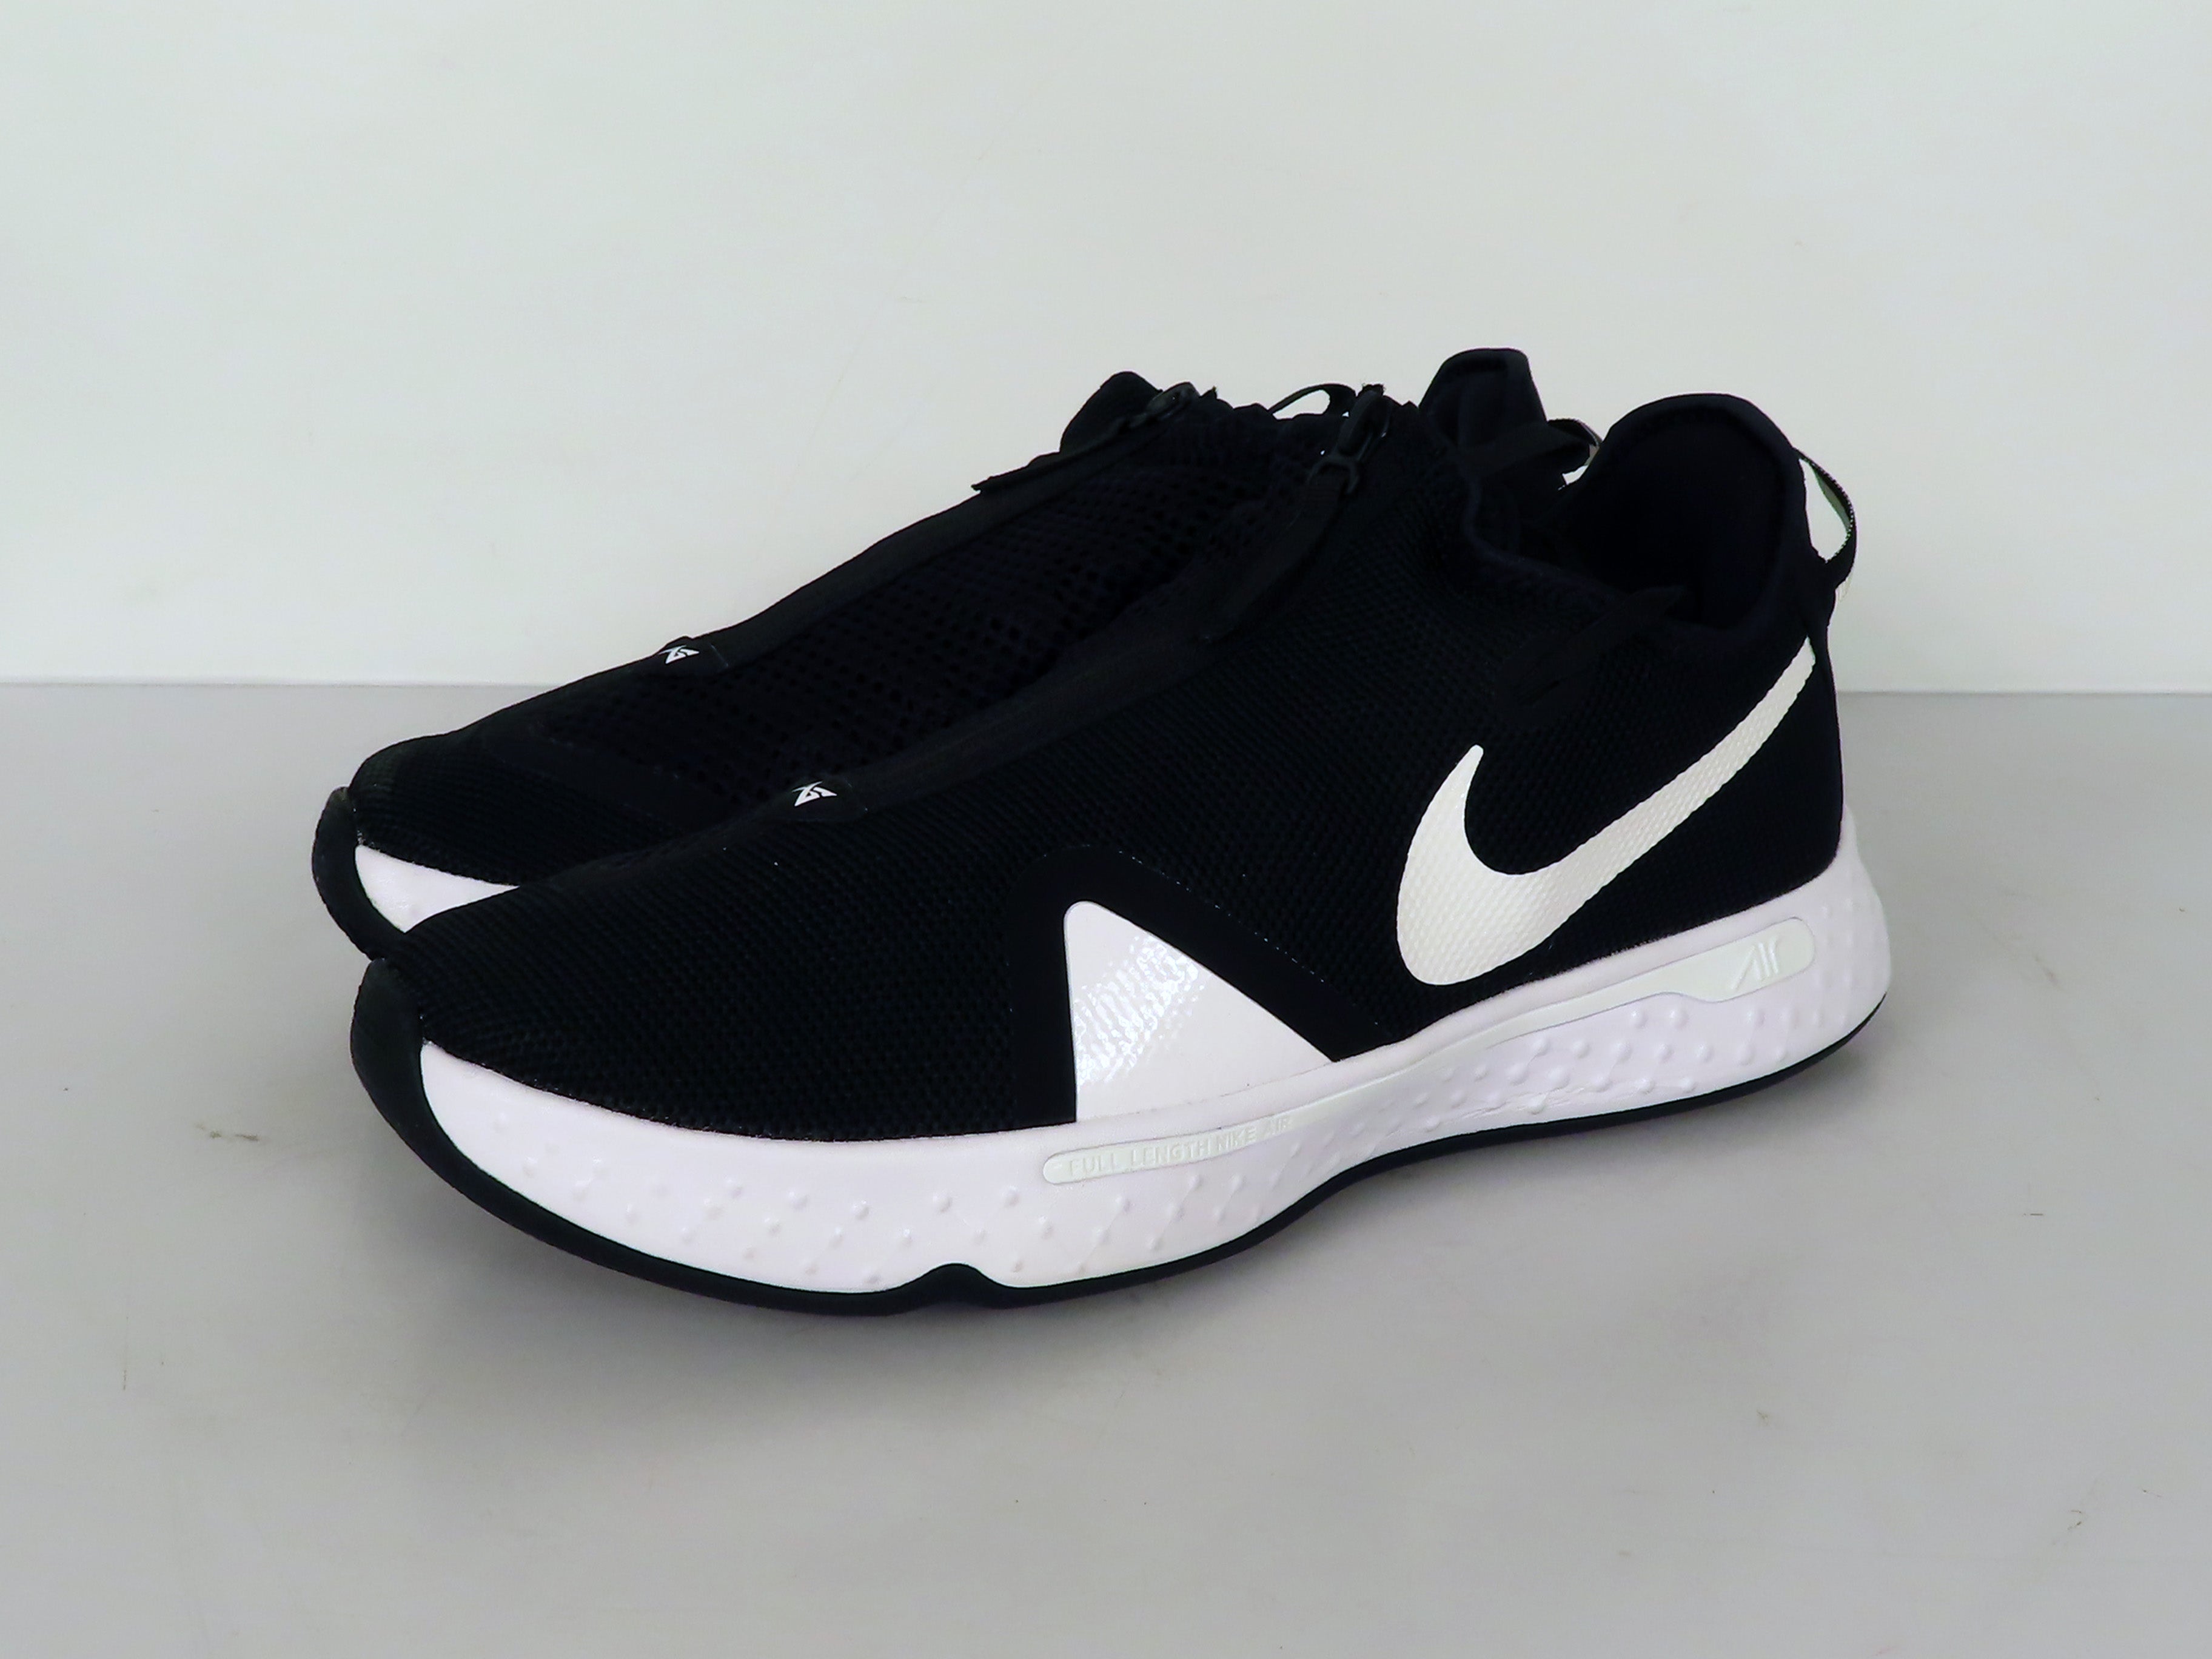 Nike PG 4 TB Promo Black Basketball Shoes Men's Size 18